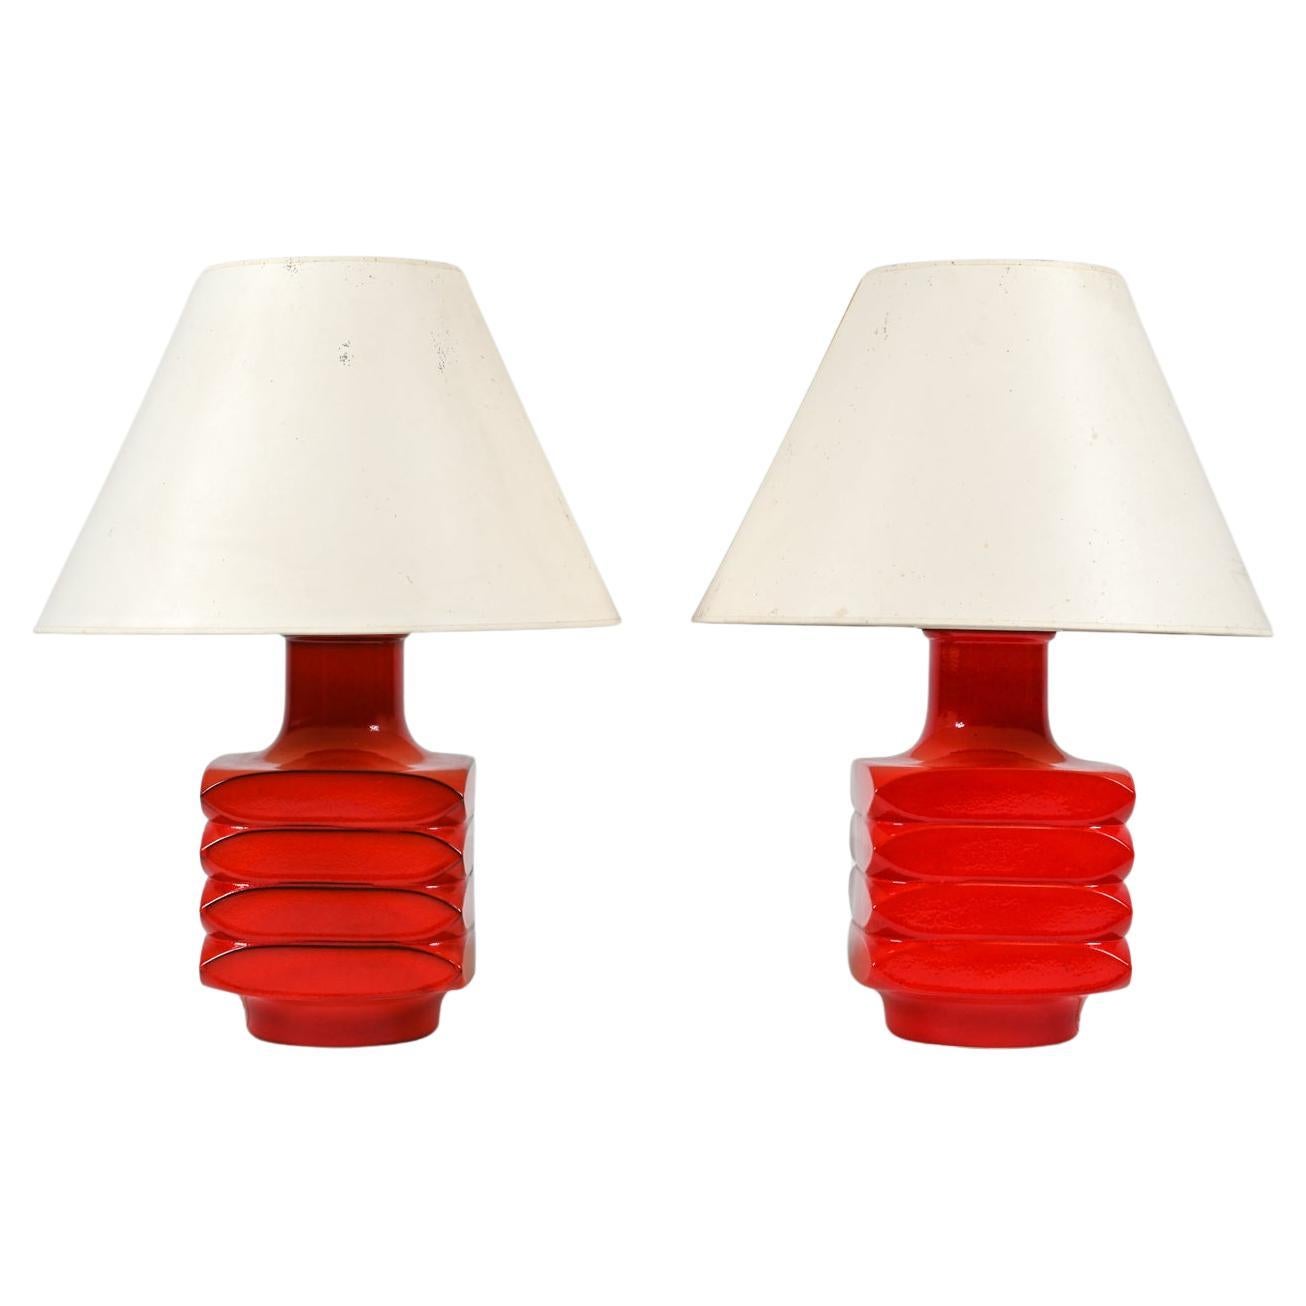 Pair of Cari Zalloni Oversized "Facette" Ceramic Lamps in Red Glaze